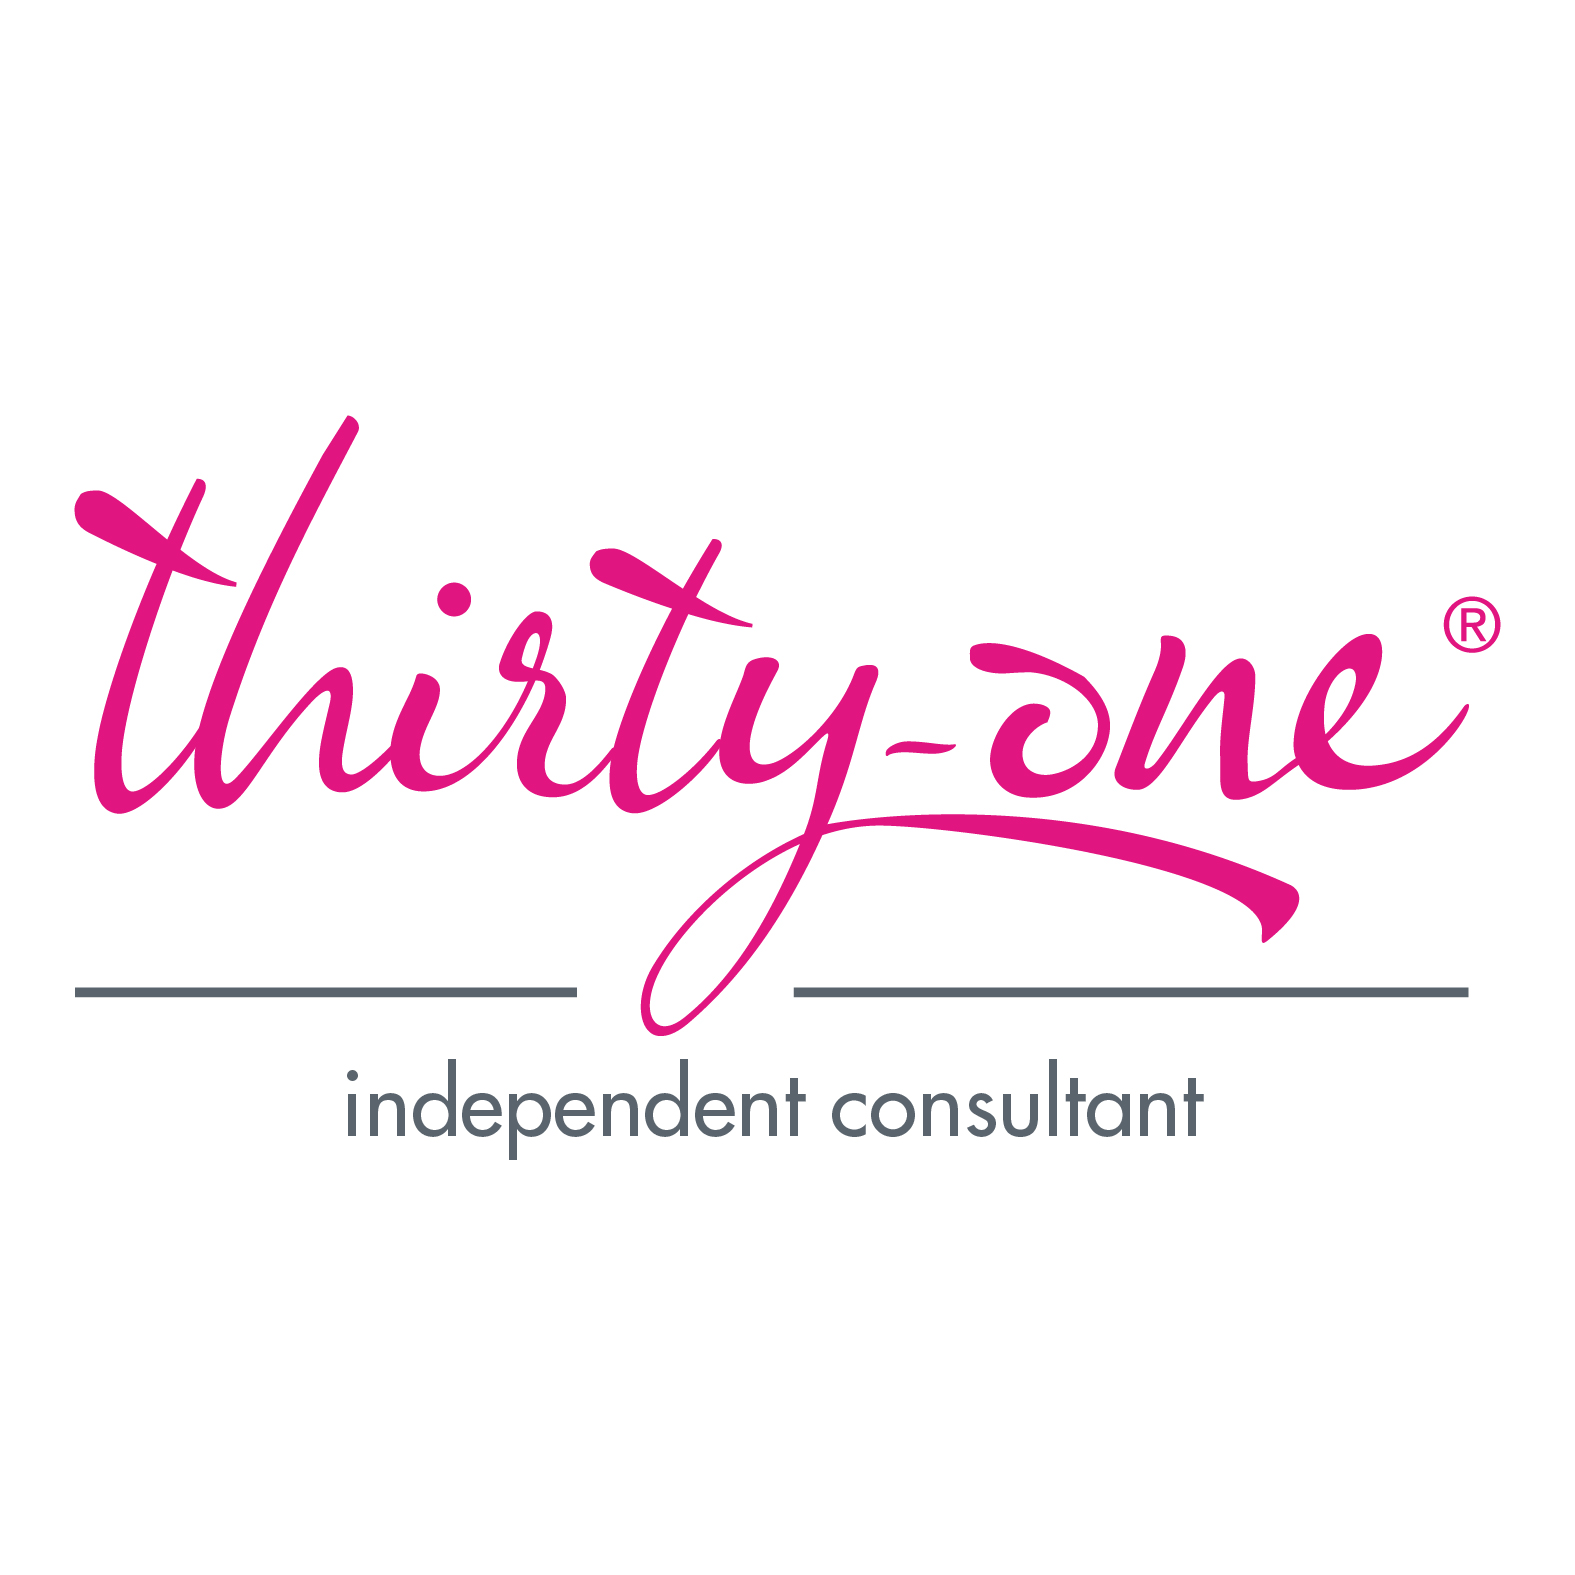 thirty-one logo